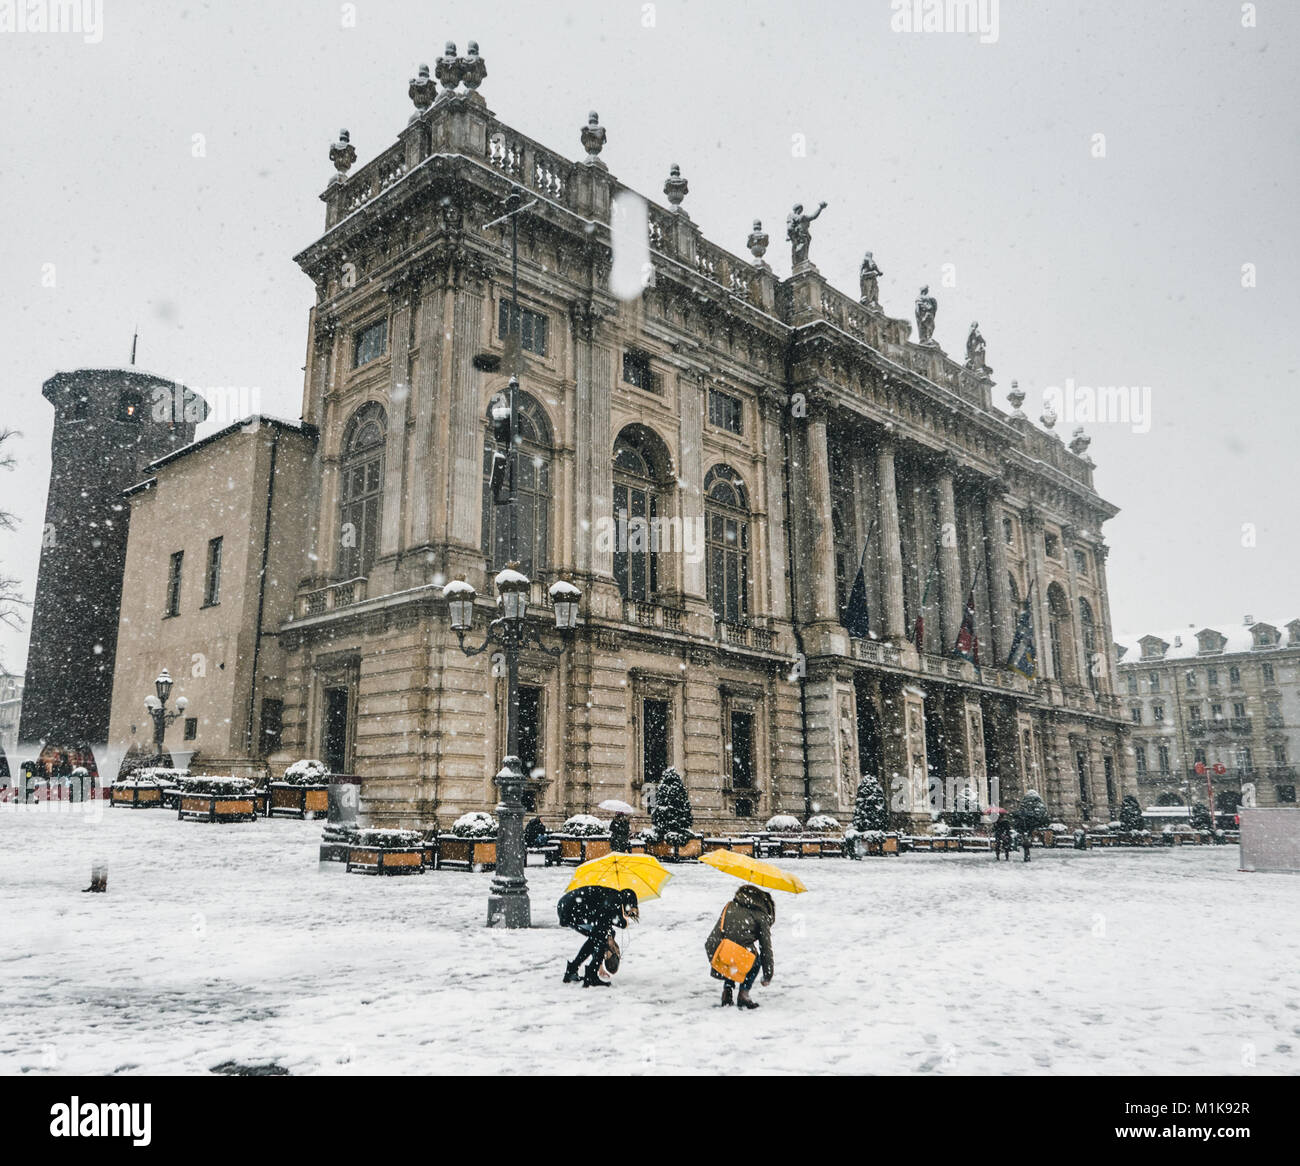 Winter in Turin Italy Stock Photo - Alamy